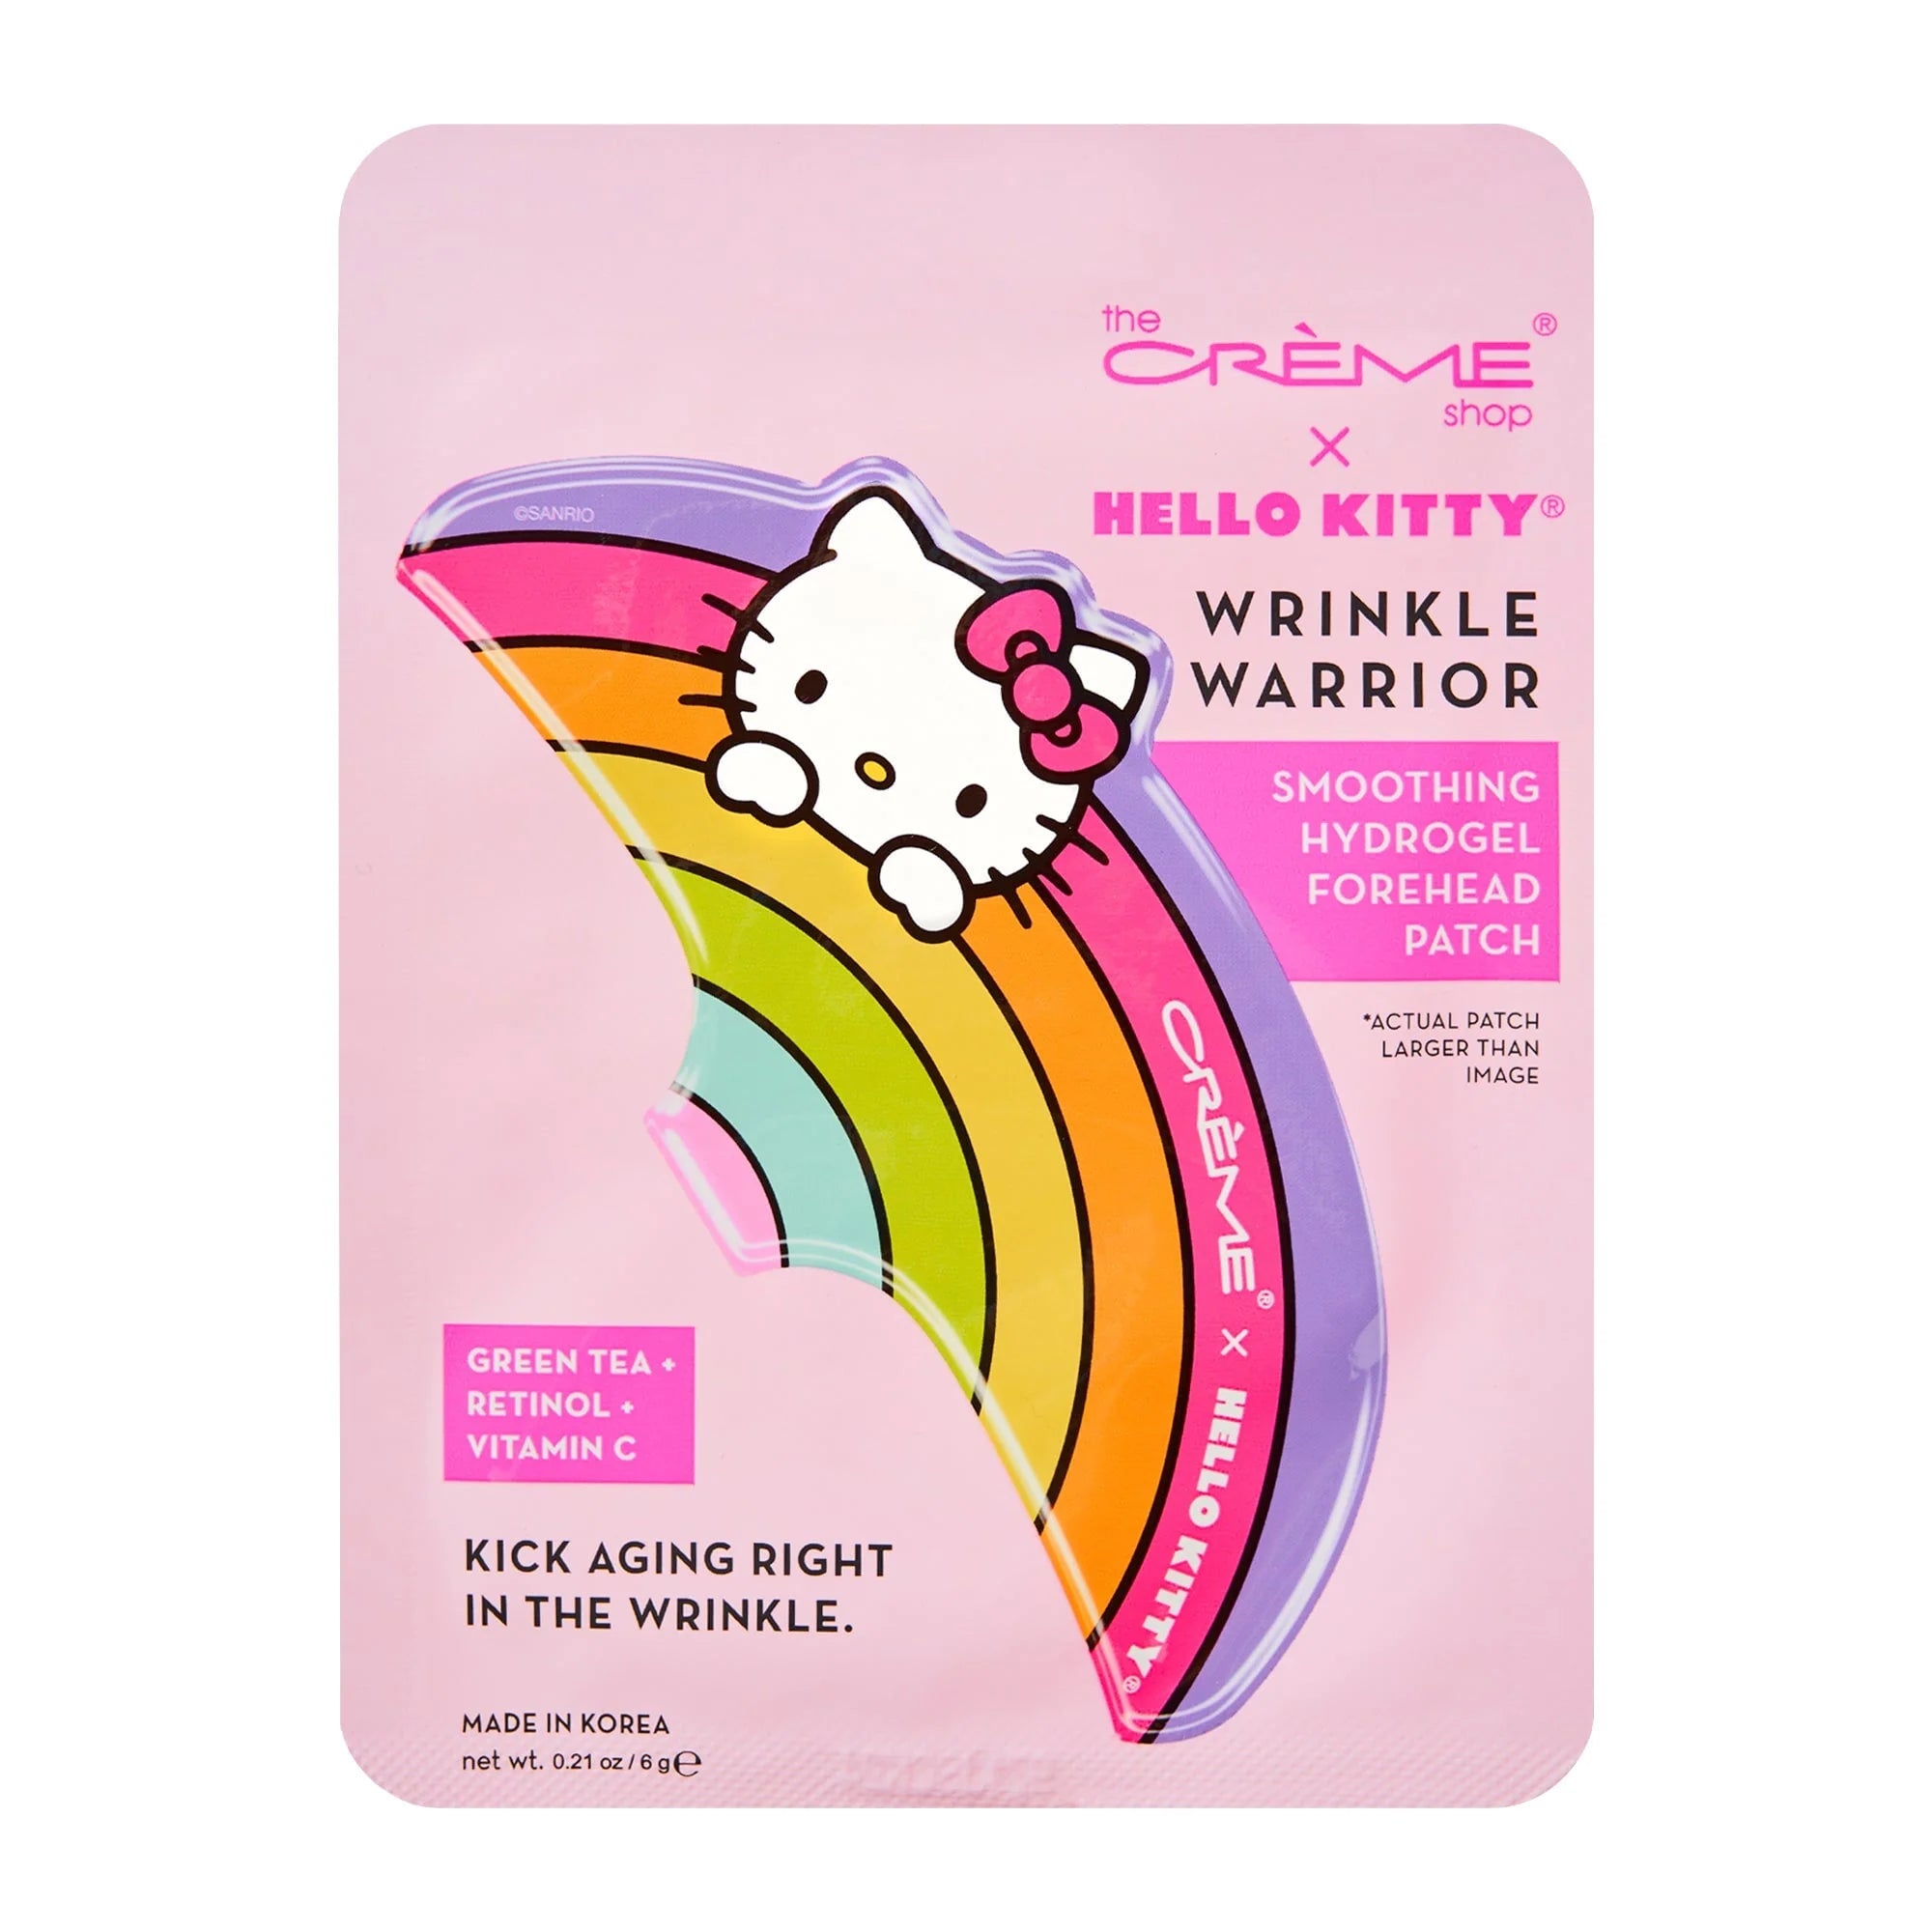 The Crème Shop x Hello Kitty Wrinkle Warrior